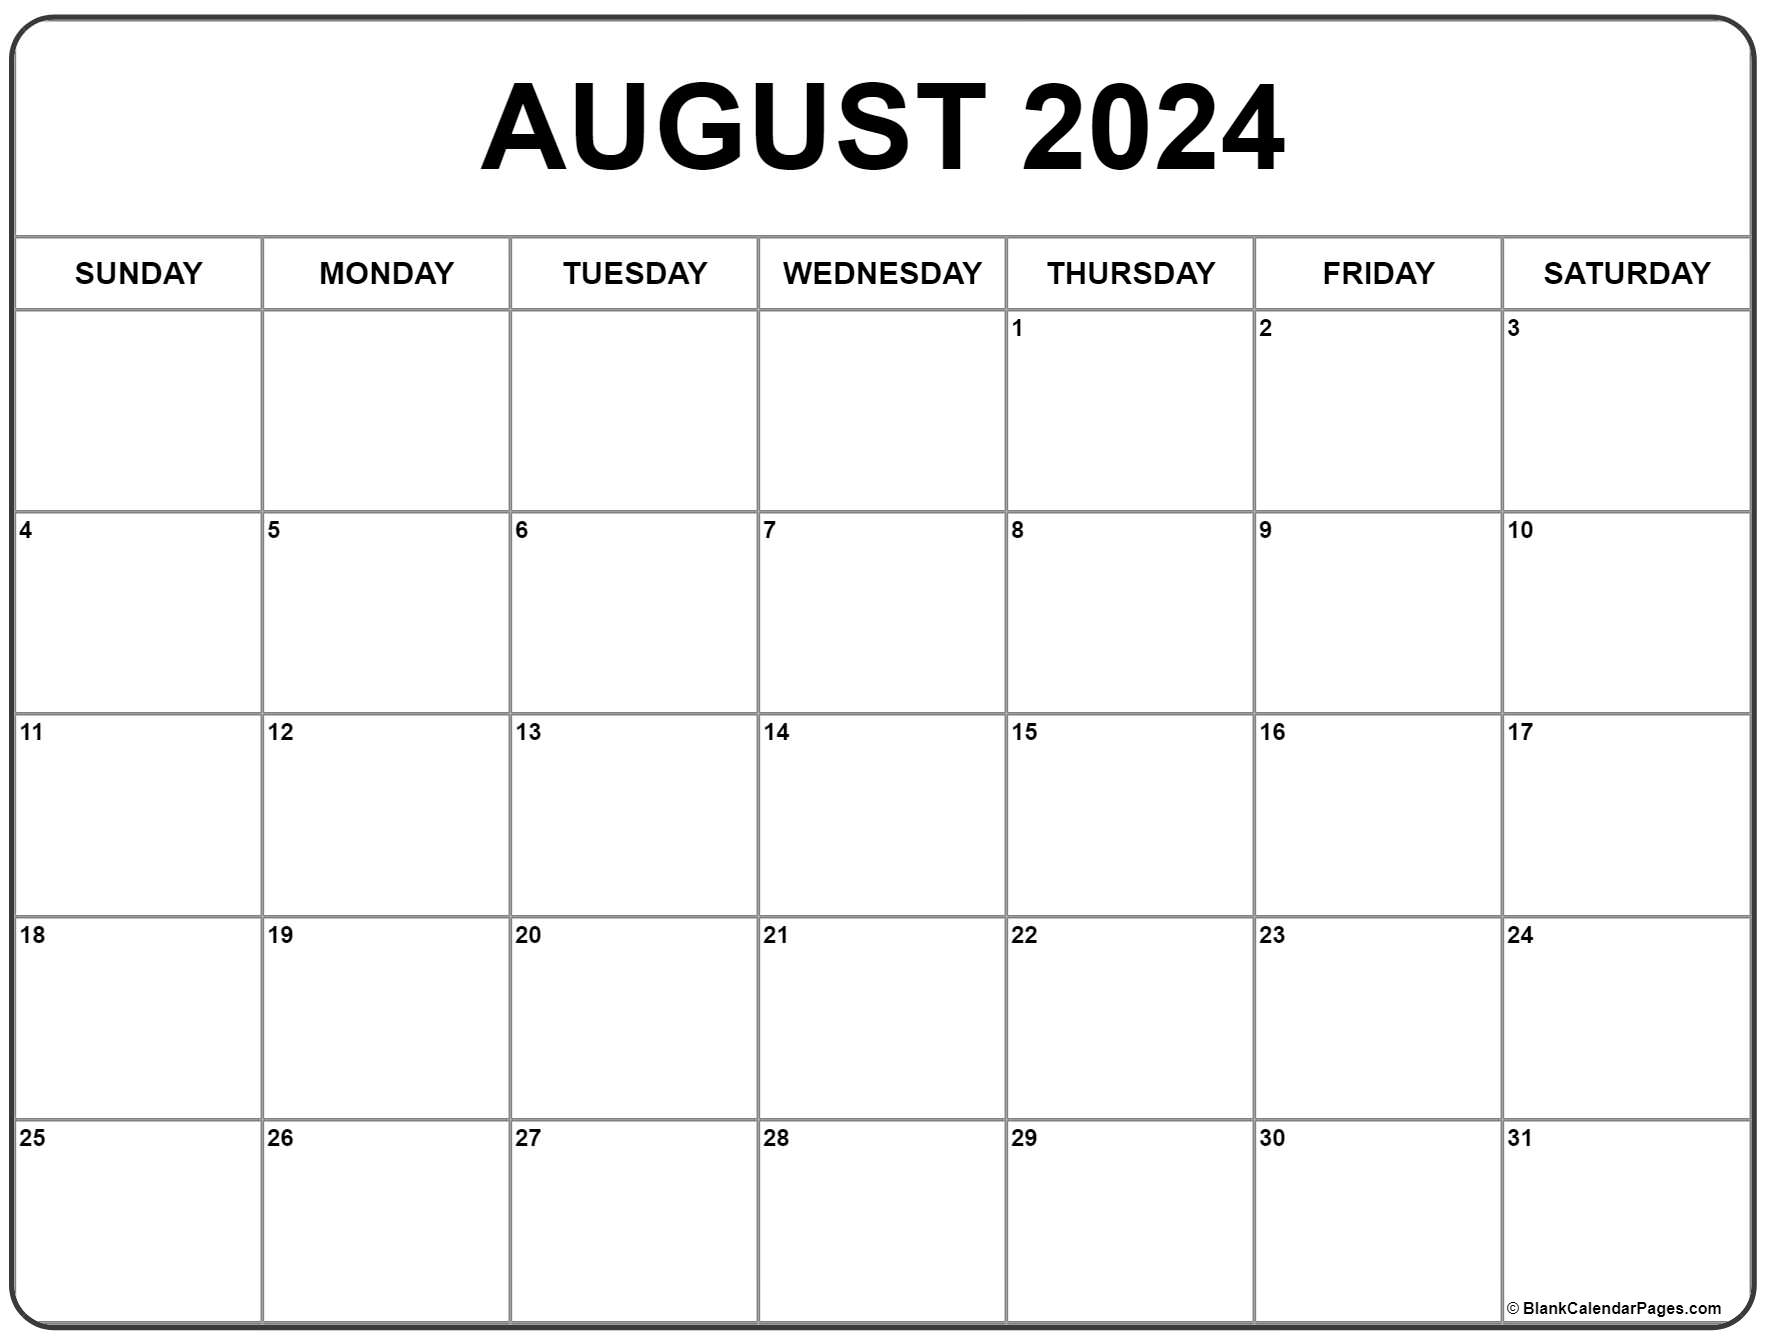 Printable August Calendar 2022 August 2022 Calendar | Free Printable Calendar Templates